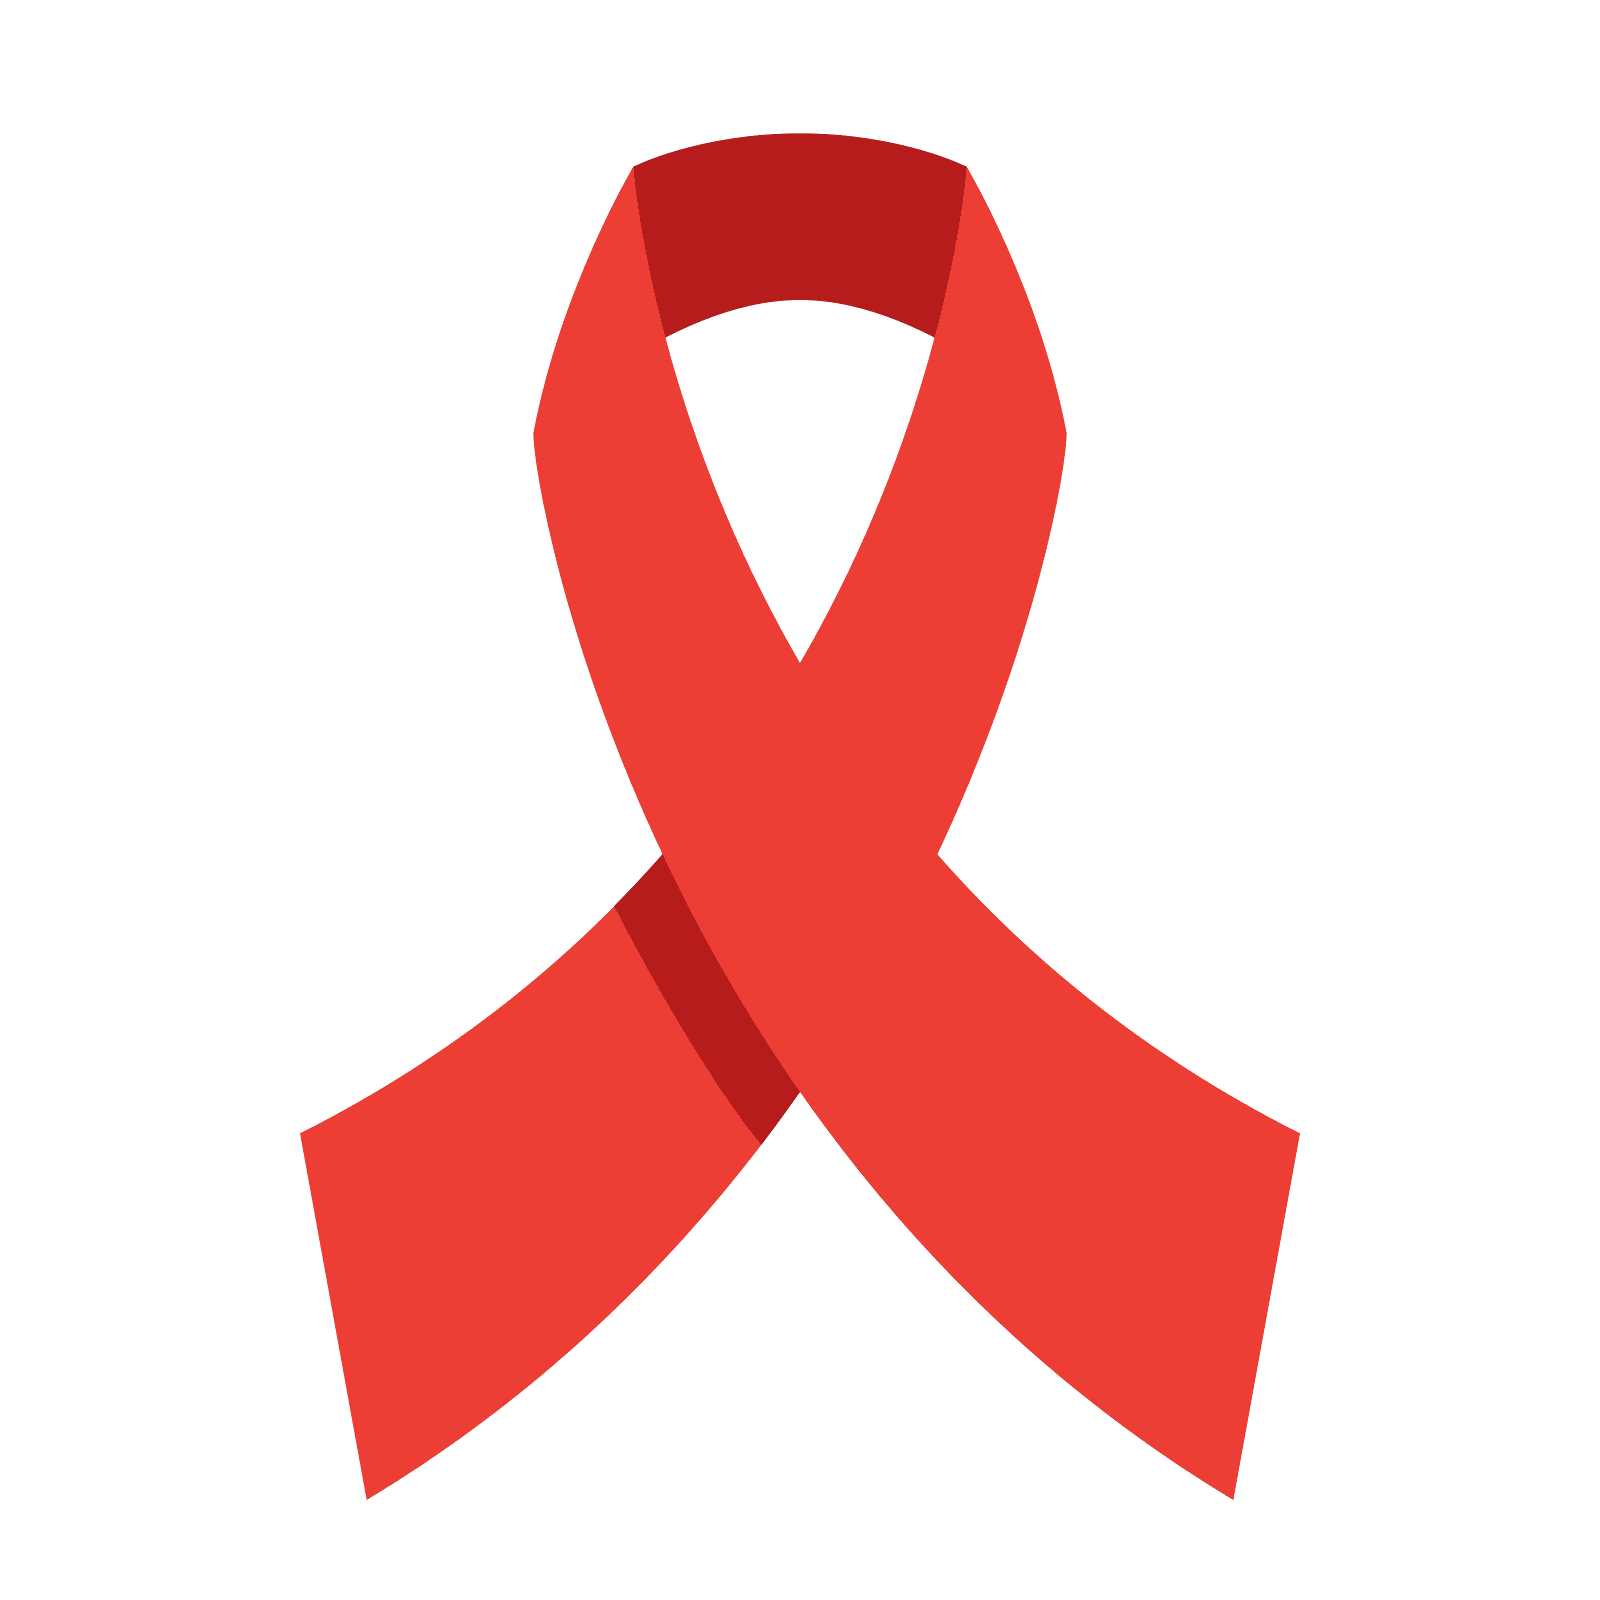 Red Ribbon World Aids Day Awareness Ribbon Cancer Symbol Png Download 16001600 Free 